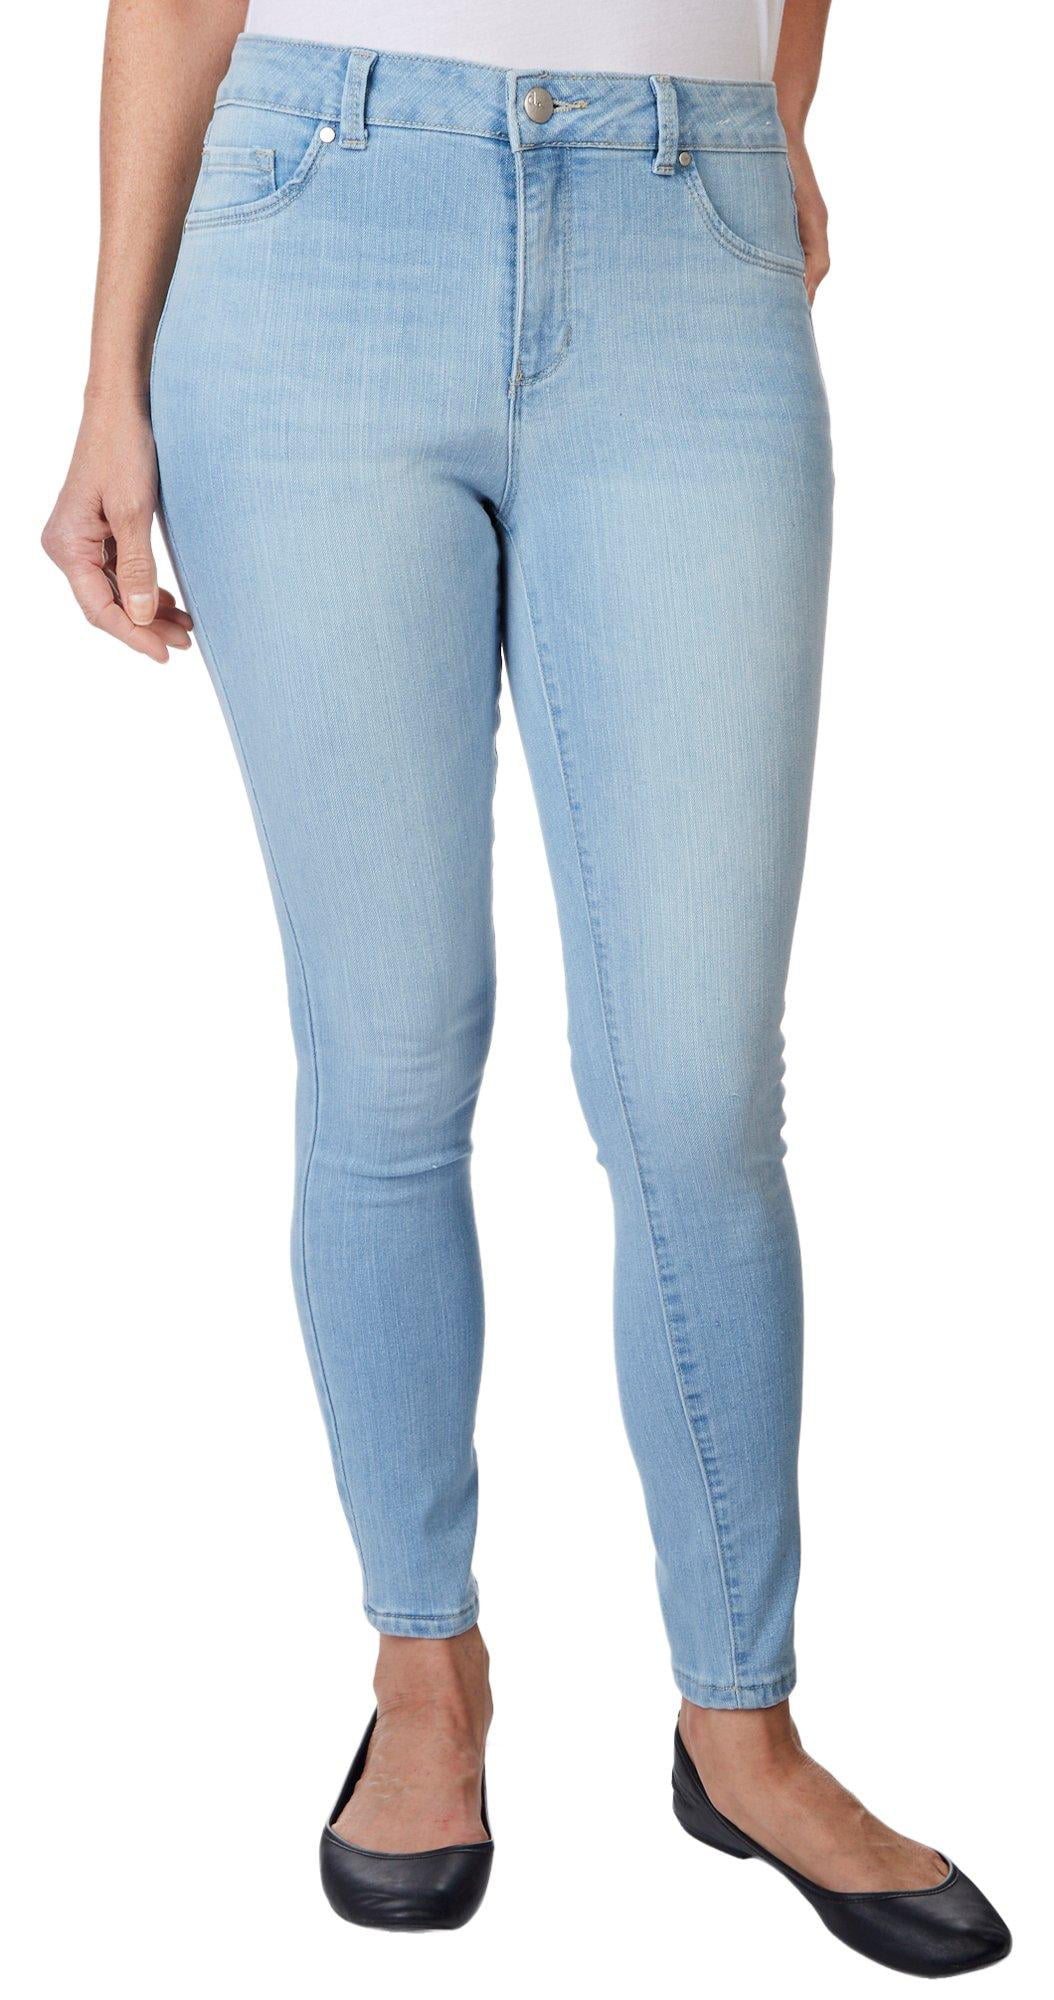 D. Jeans Womens 27 in. Hi-Rise Skinny Denim Jeans 12 Light wash -  